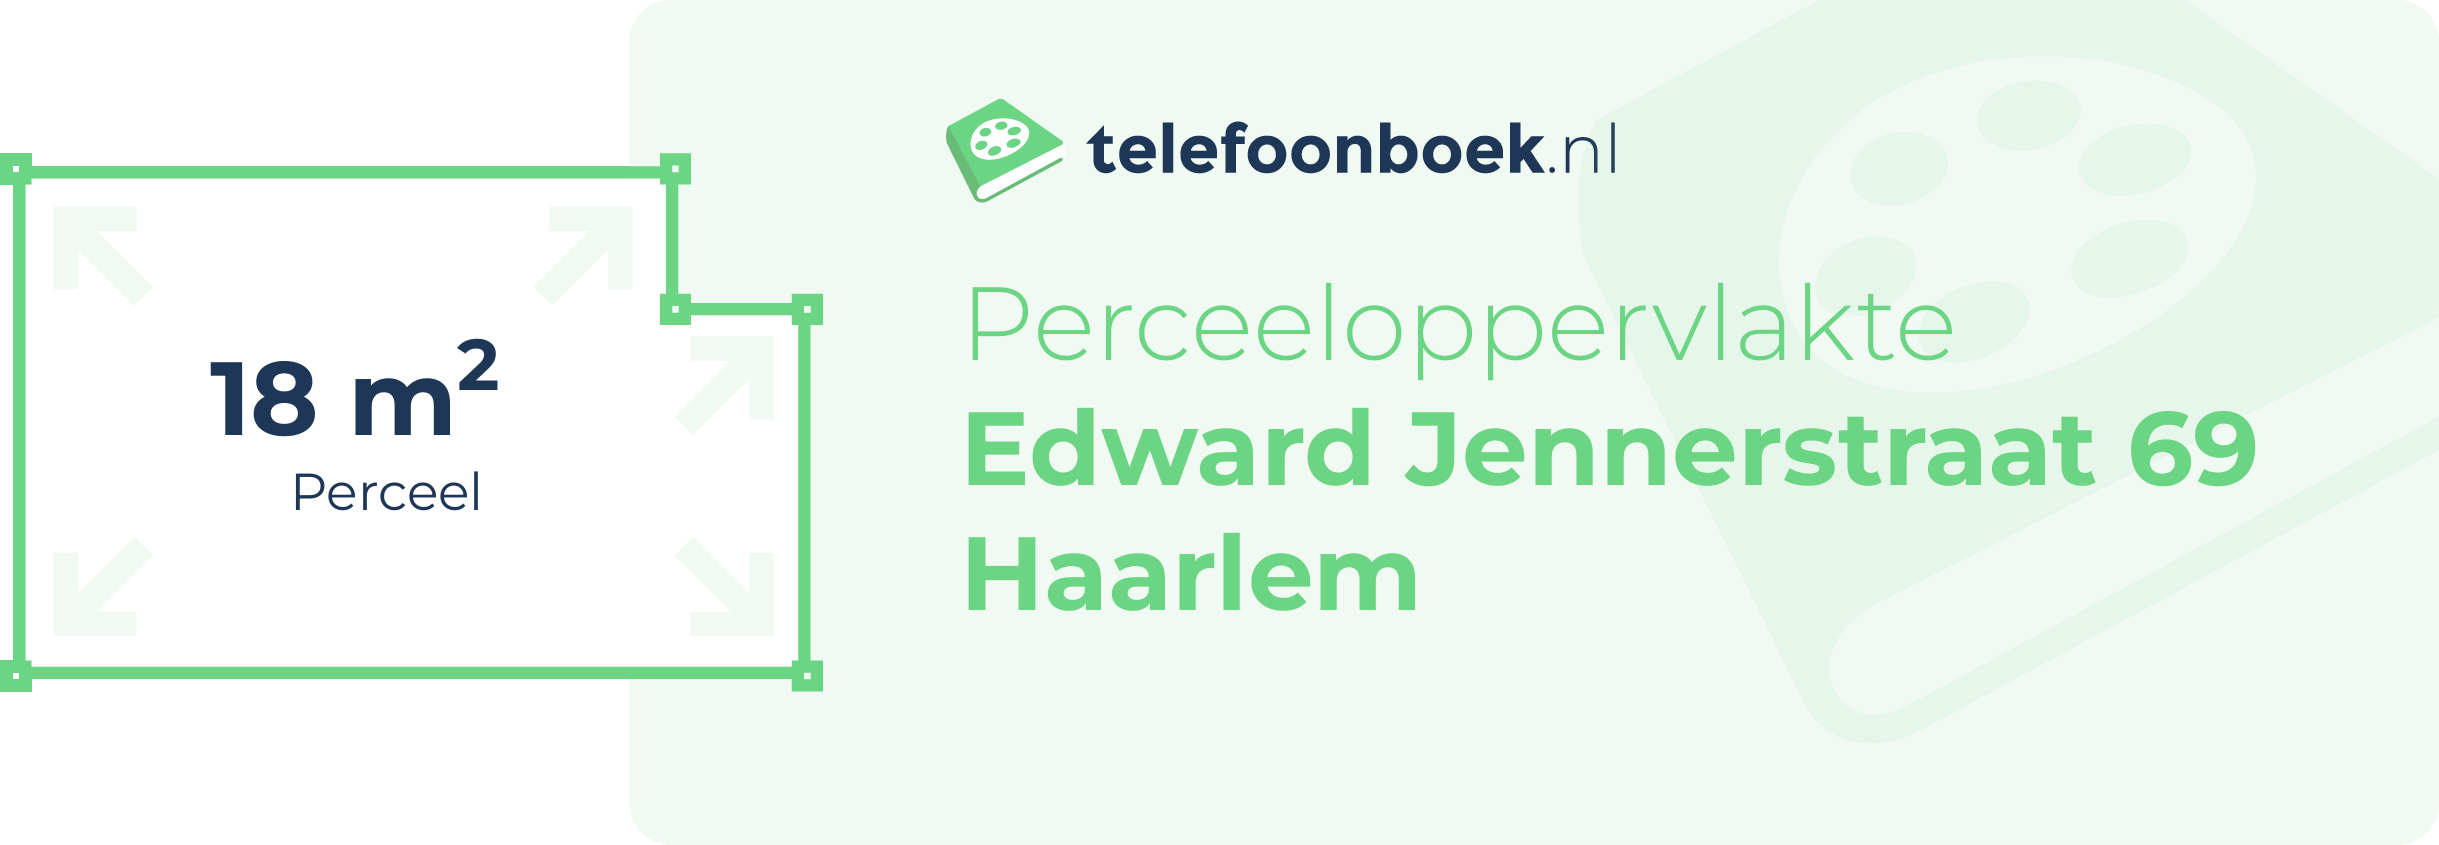 Perceeloppervlakte Edward Jennerstraat 69 Haarlem